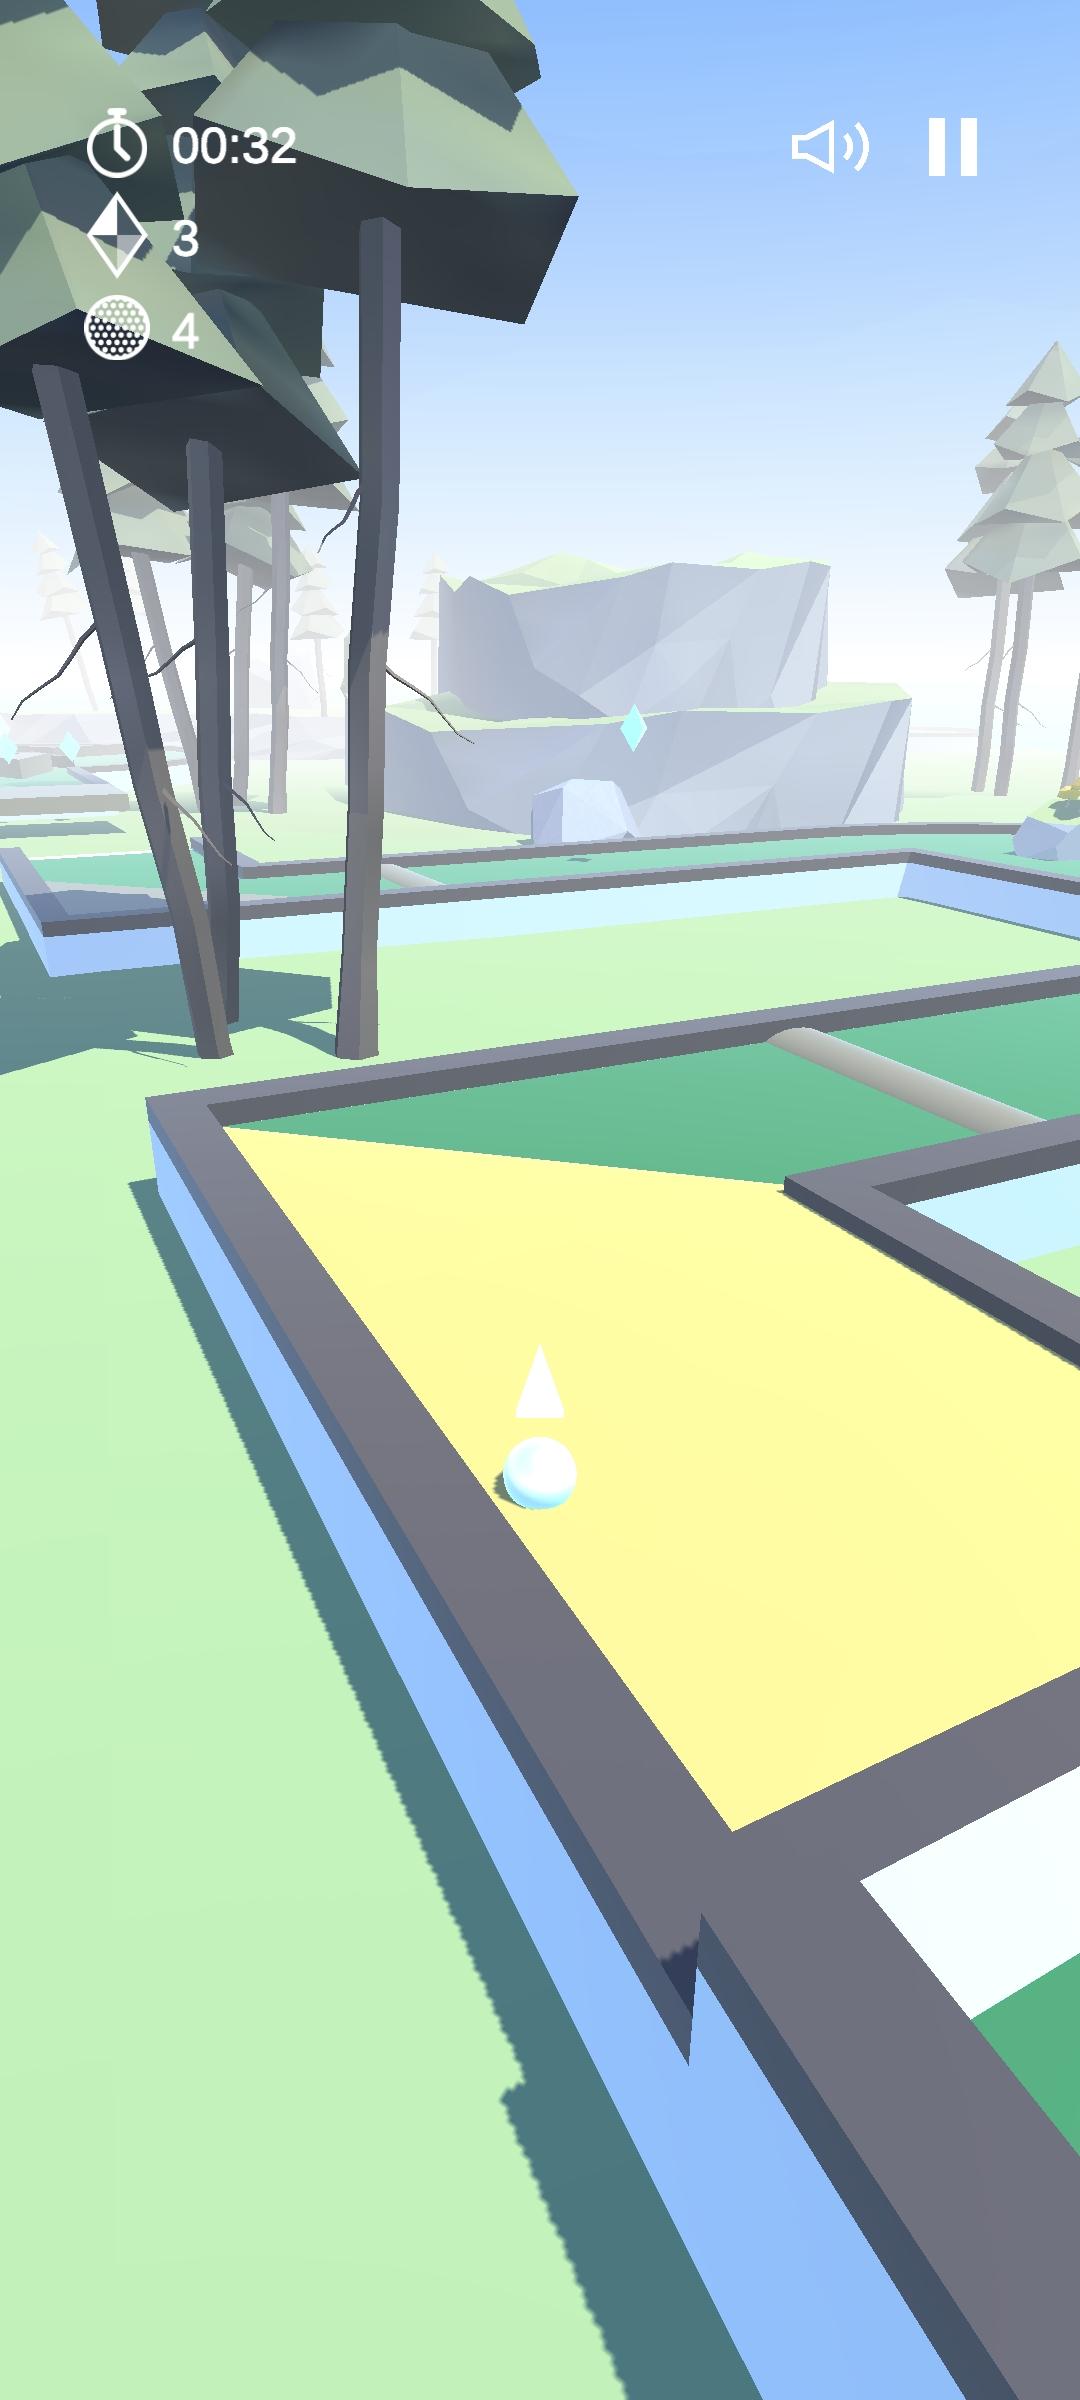 Mini Golf Adventure 2.11 Screenshot 12